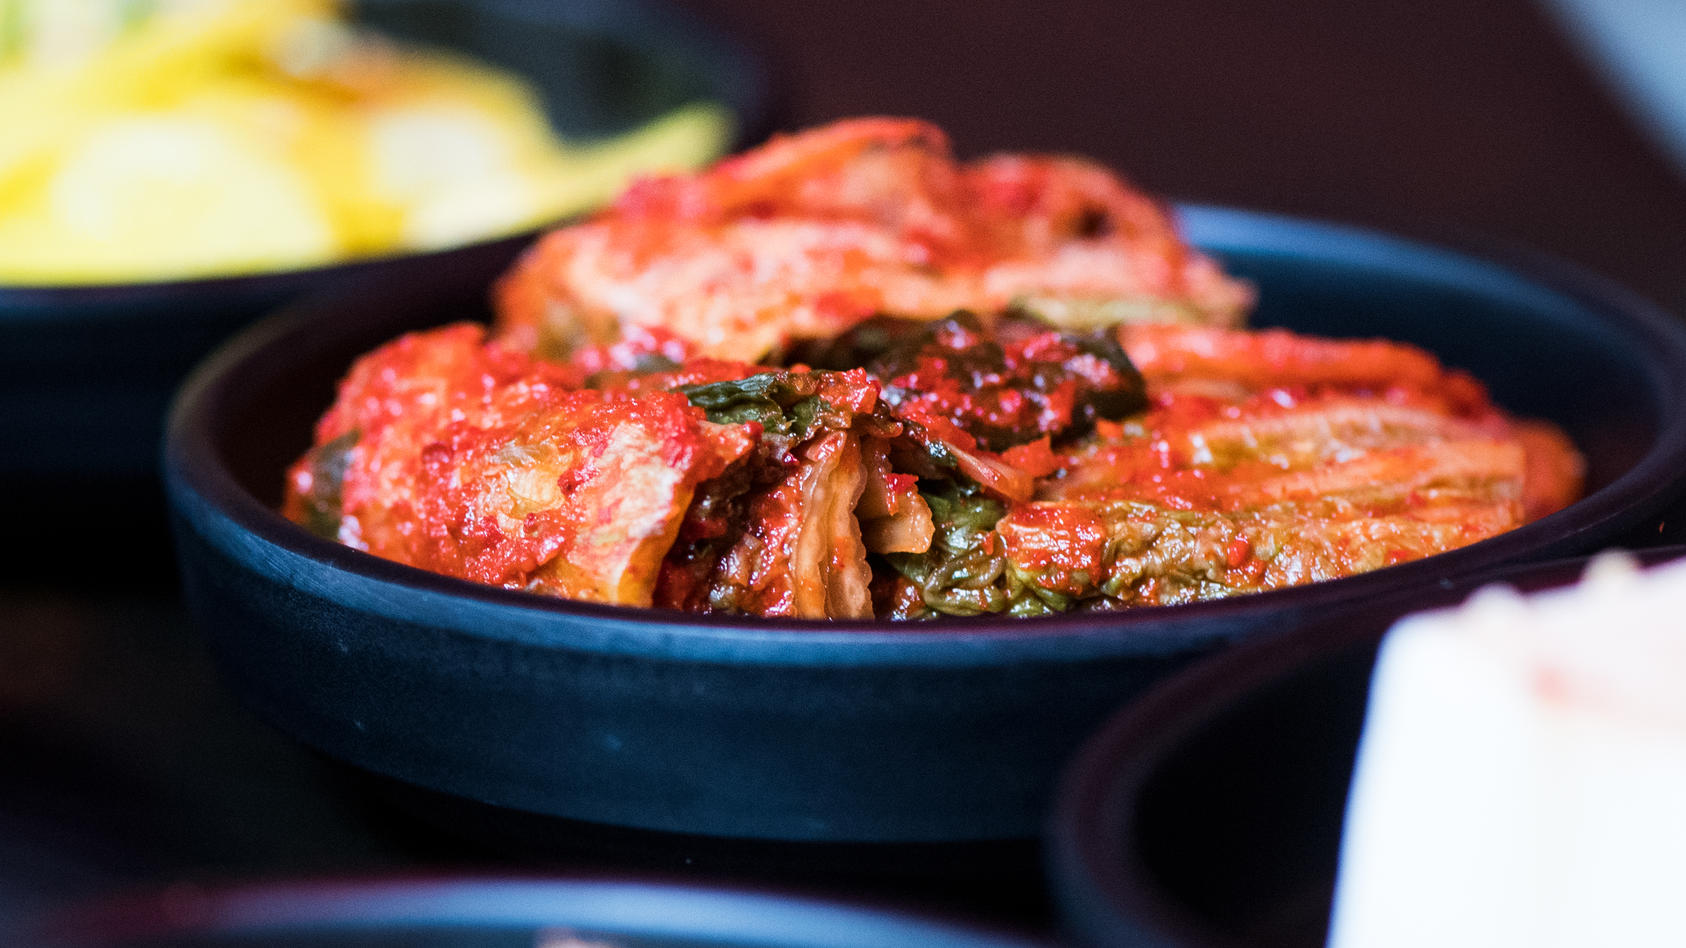 Koreanisches Barbecue mit Kimchi (Chinakohl) im Fokus